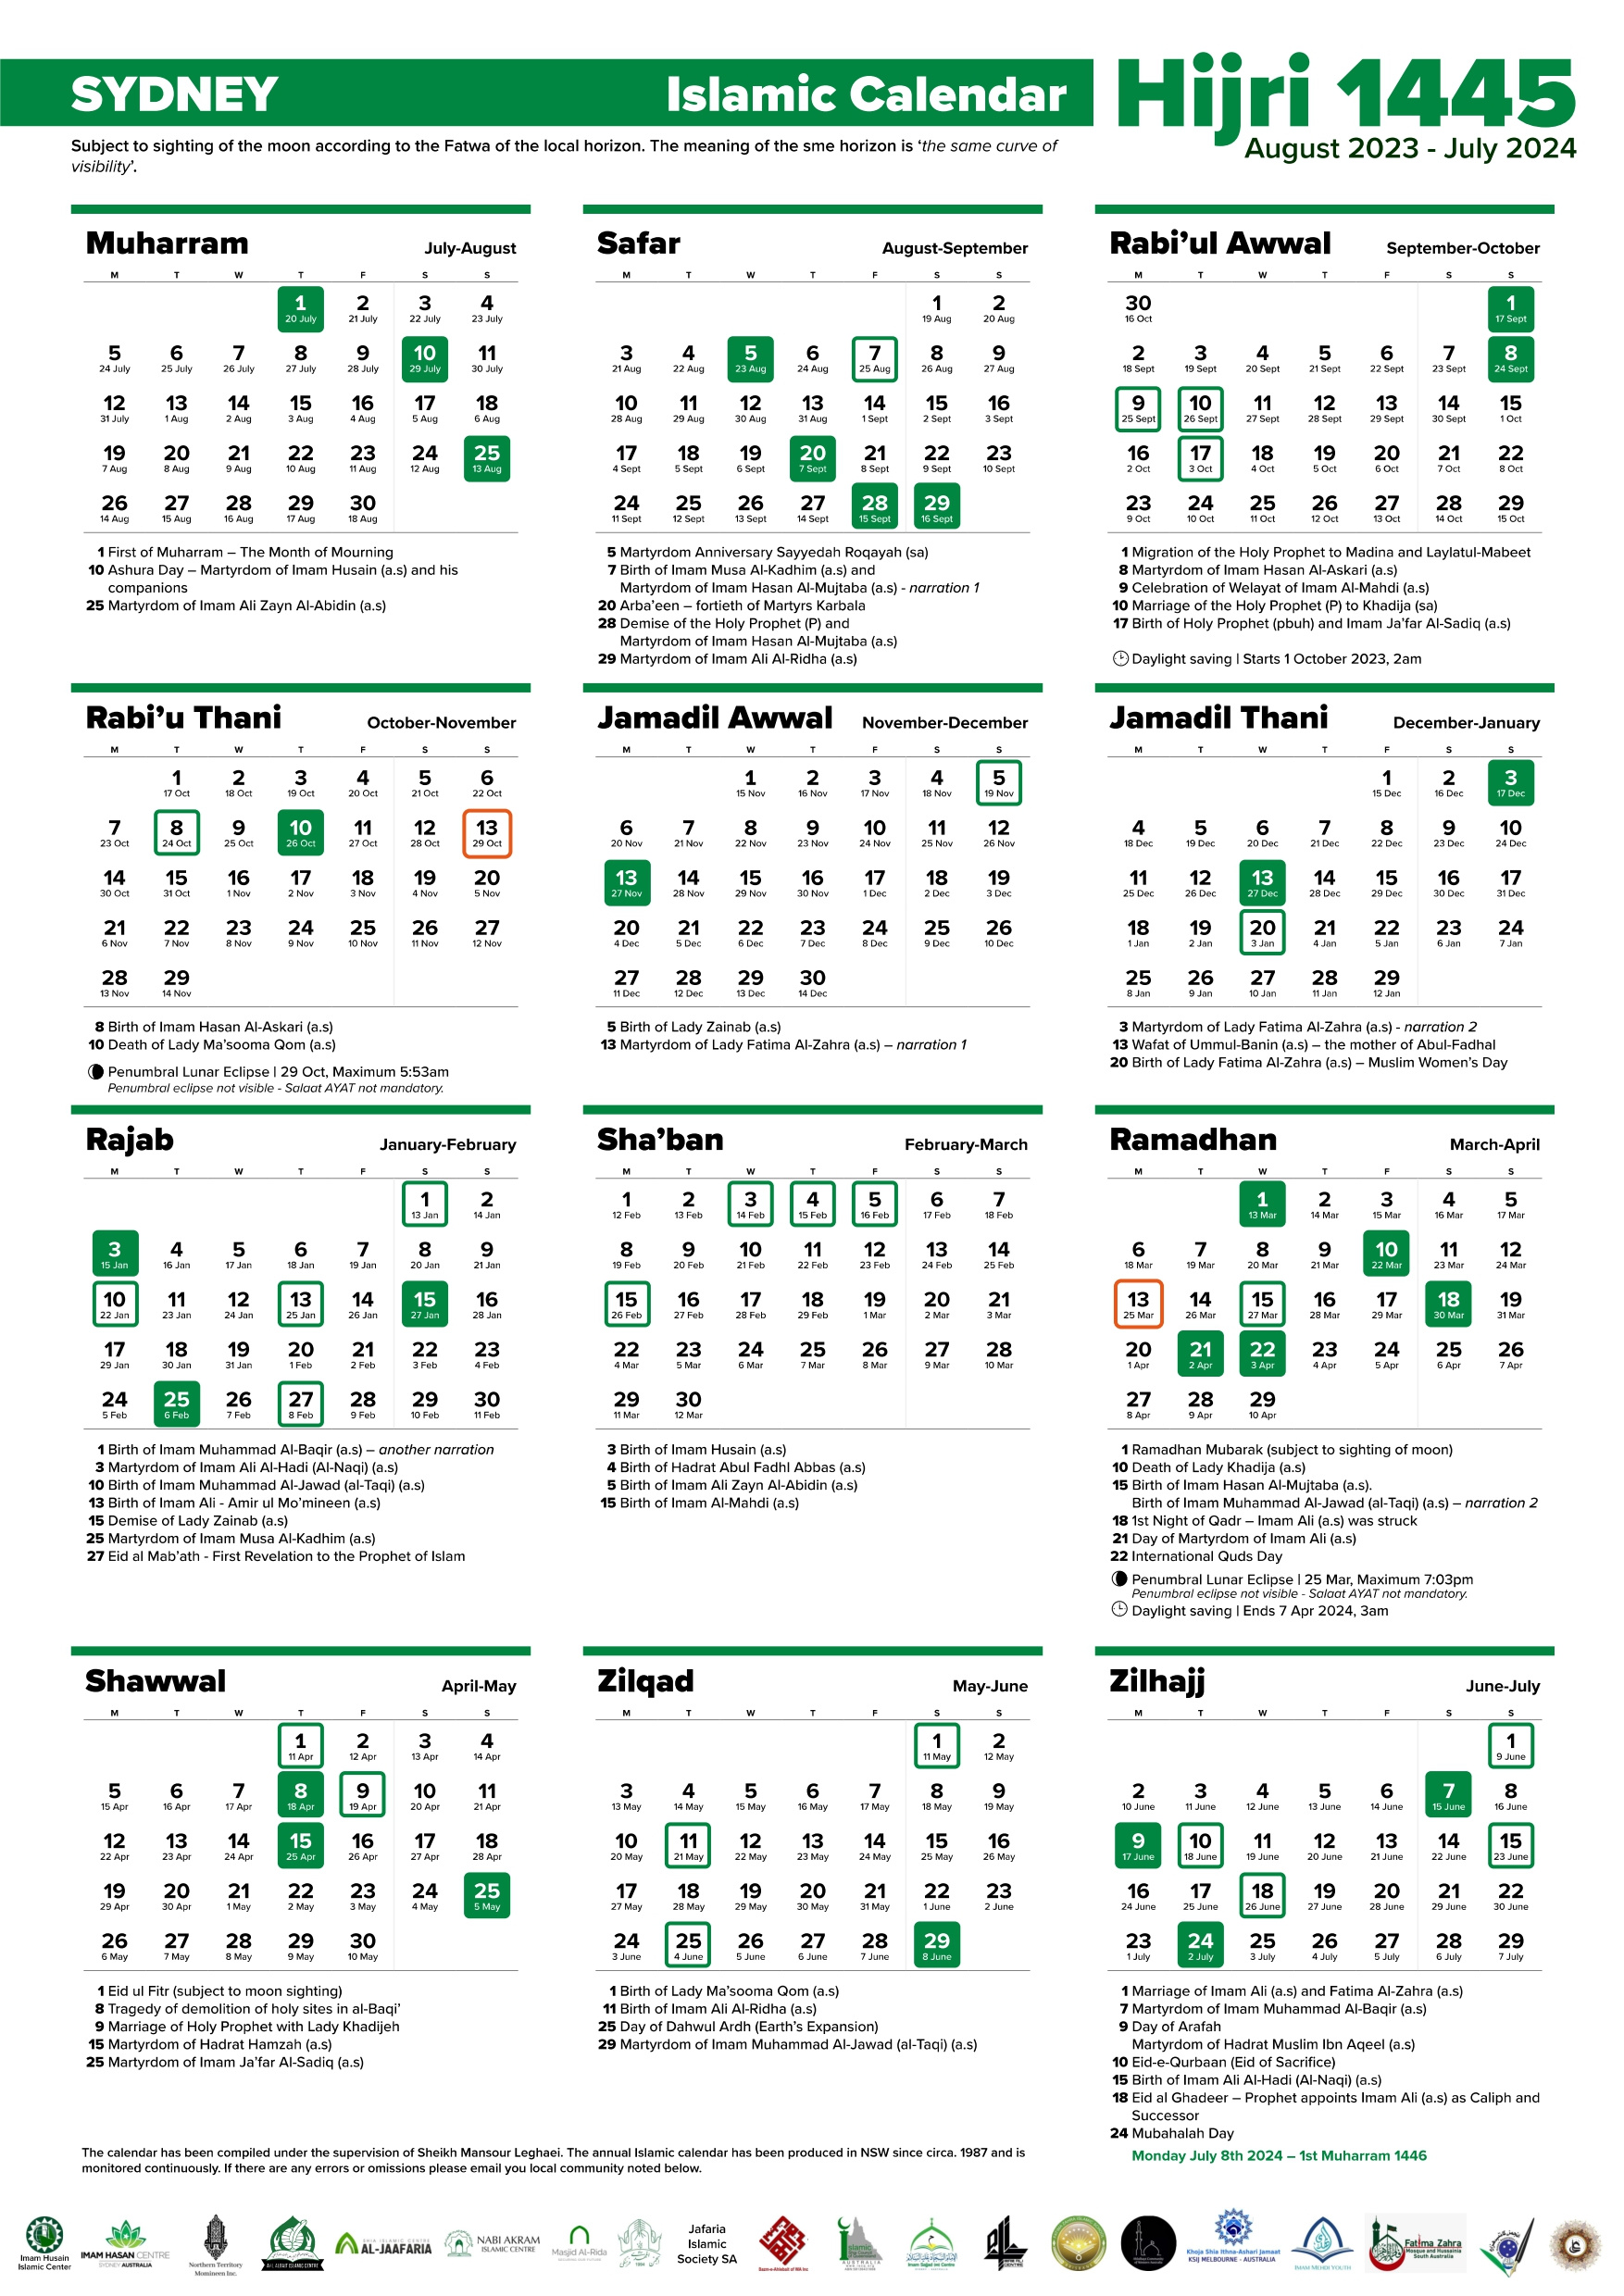 Annual Islamic Calendar 1445 Ah / 2023-2024 Ad – Imam Husain within 28 July 2024 In Islamic Calendar